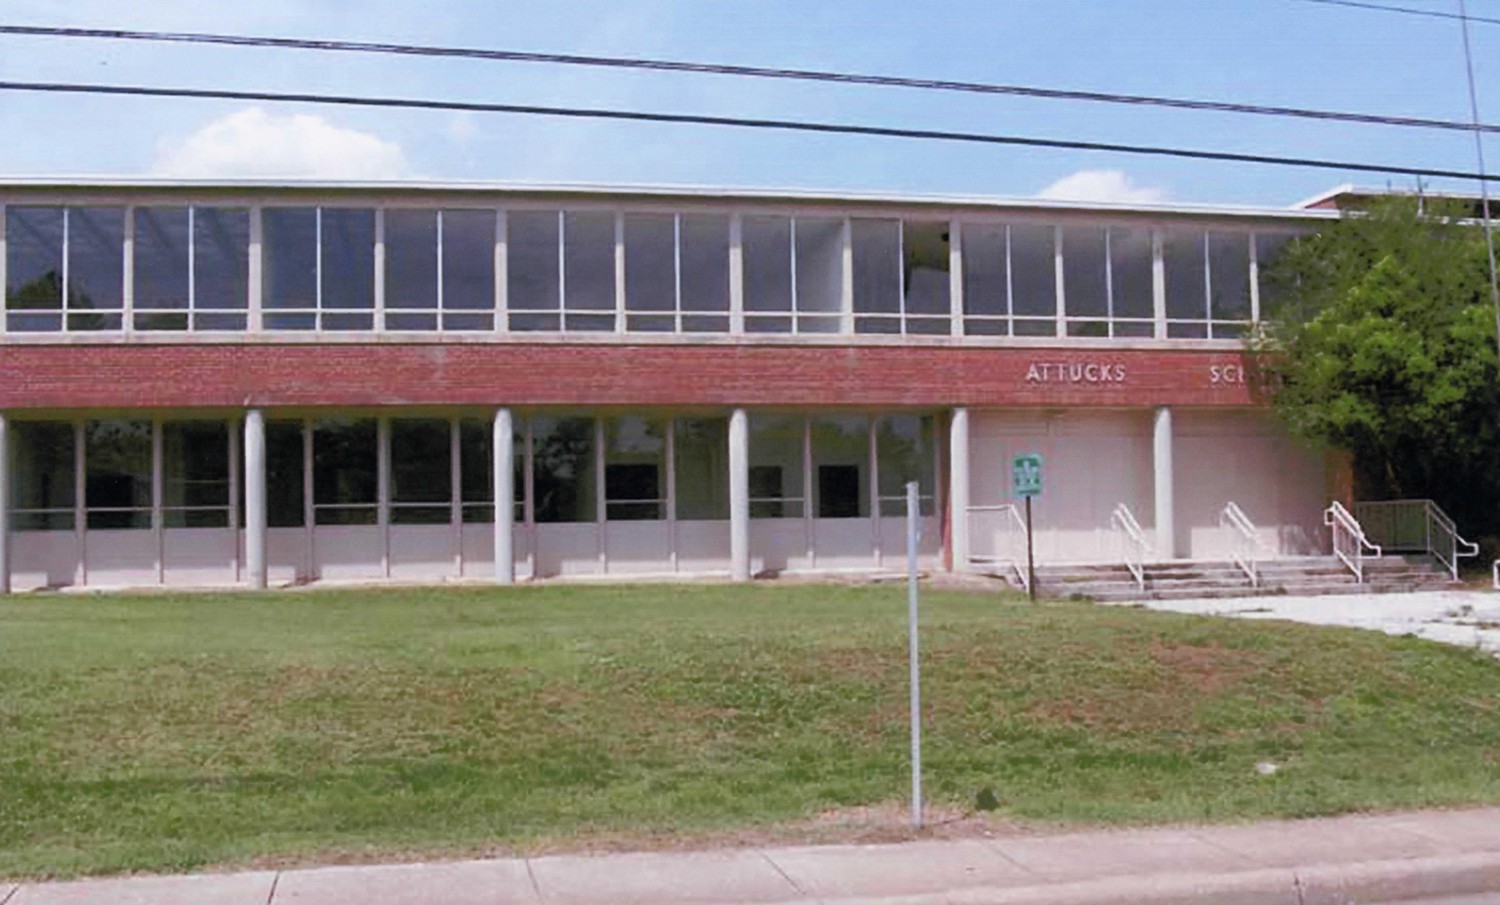 Attucks High School, Hopkinsville Kentucky South elevation of classroom annex (2012)